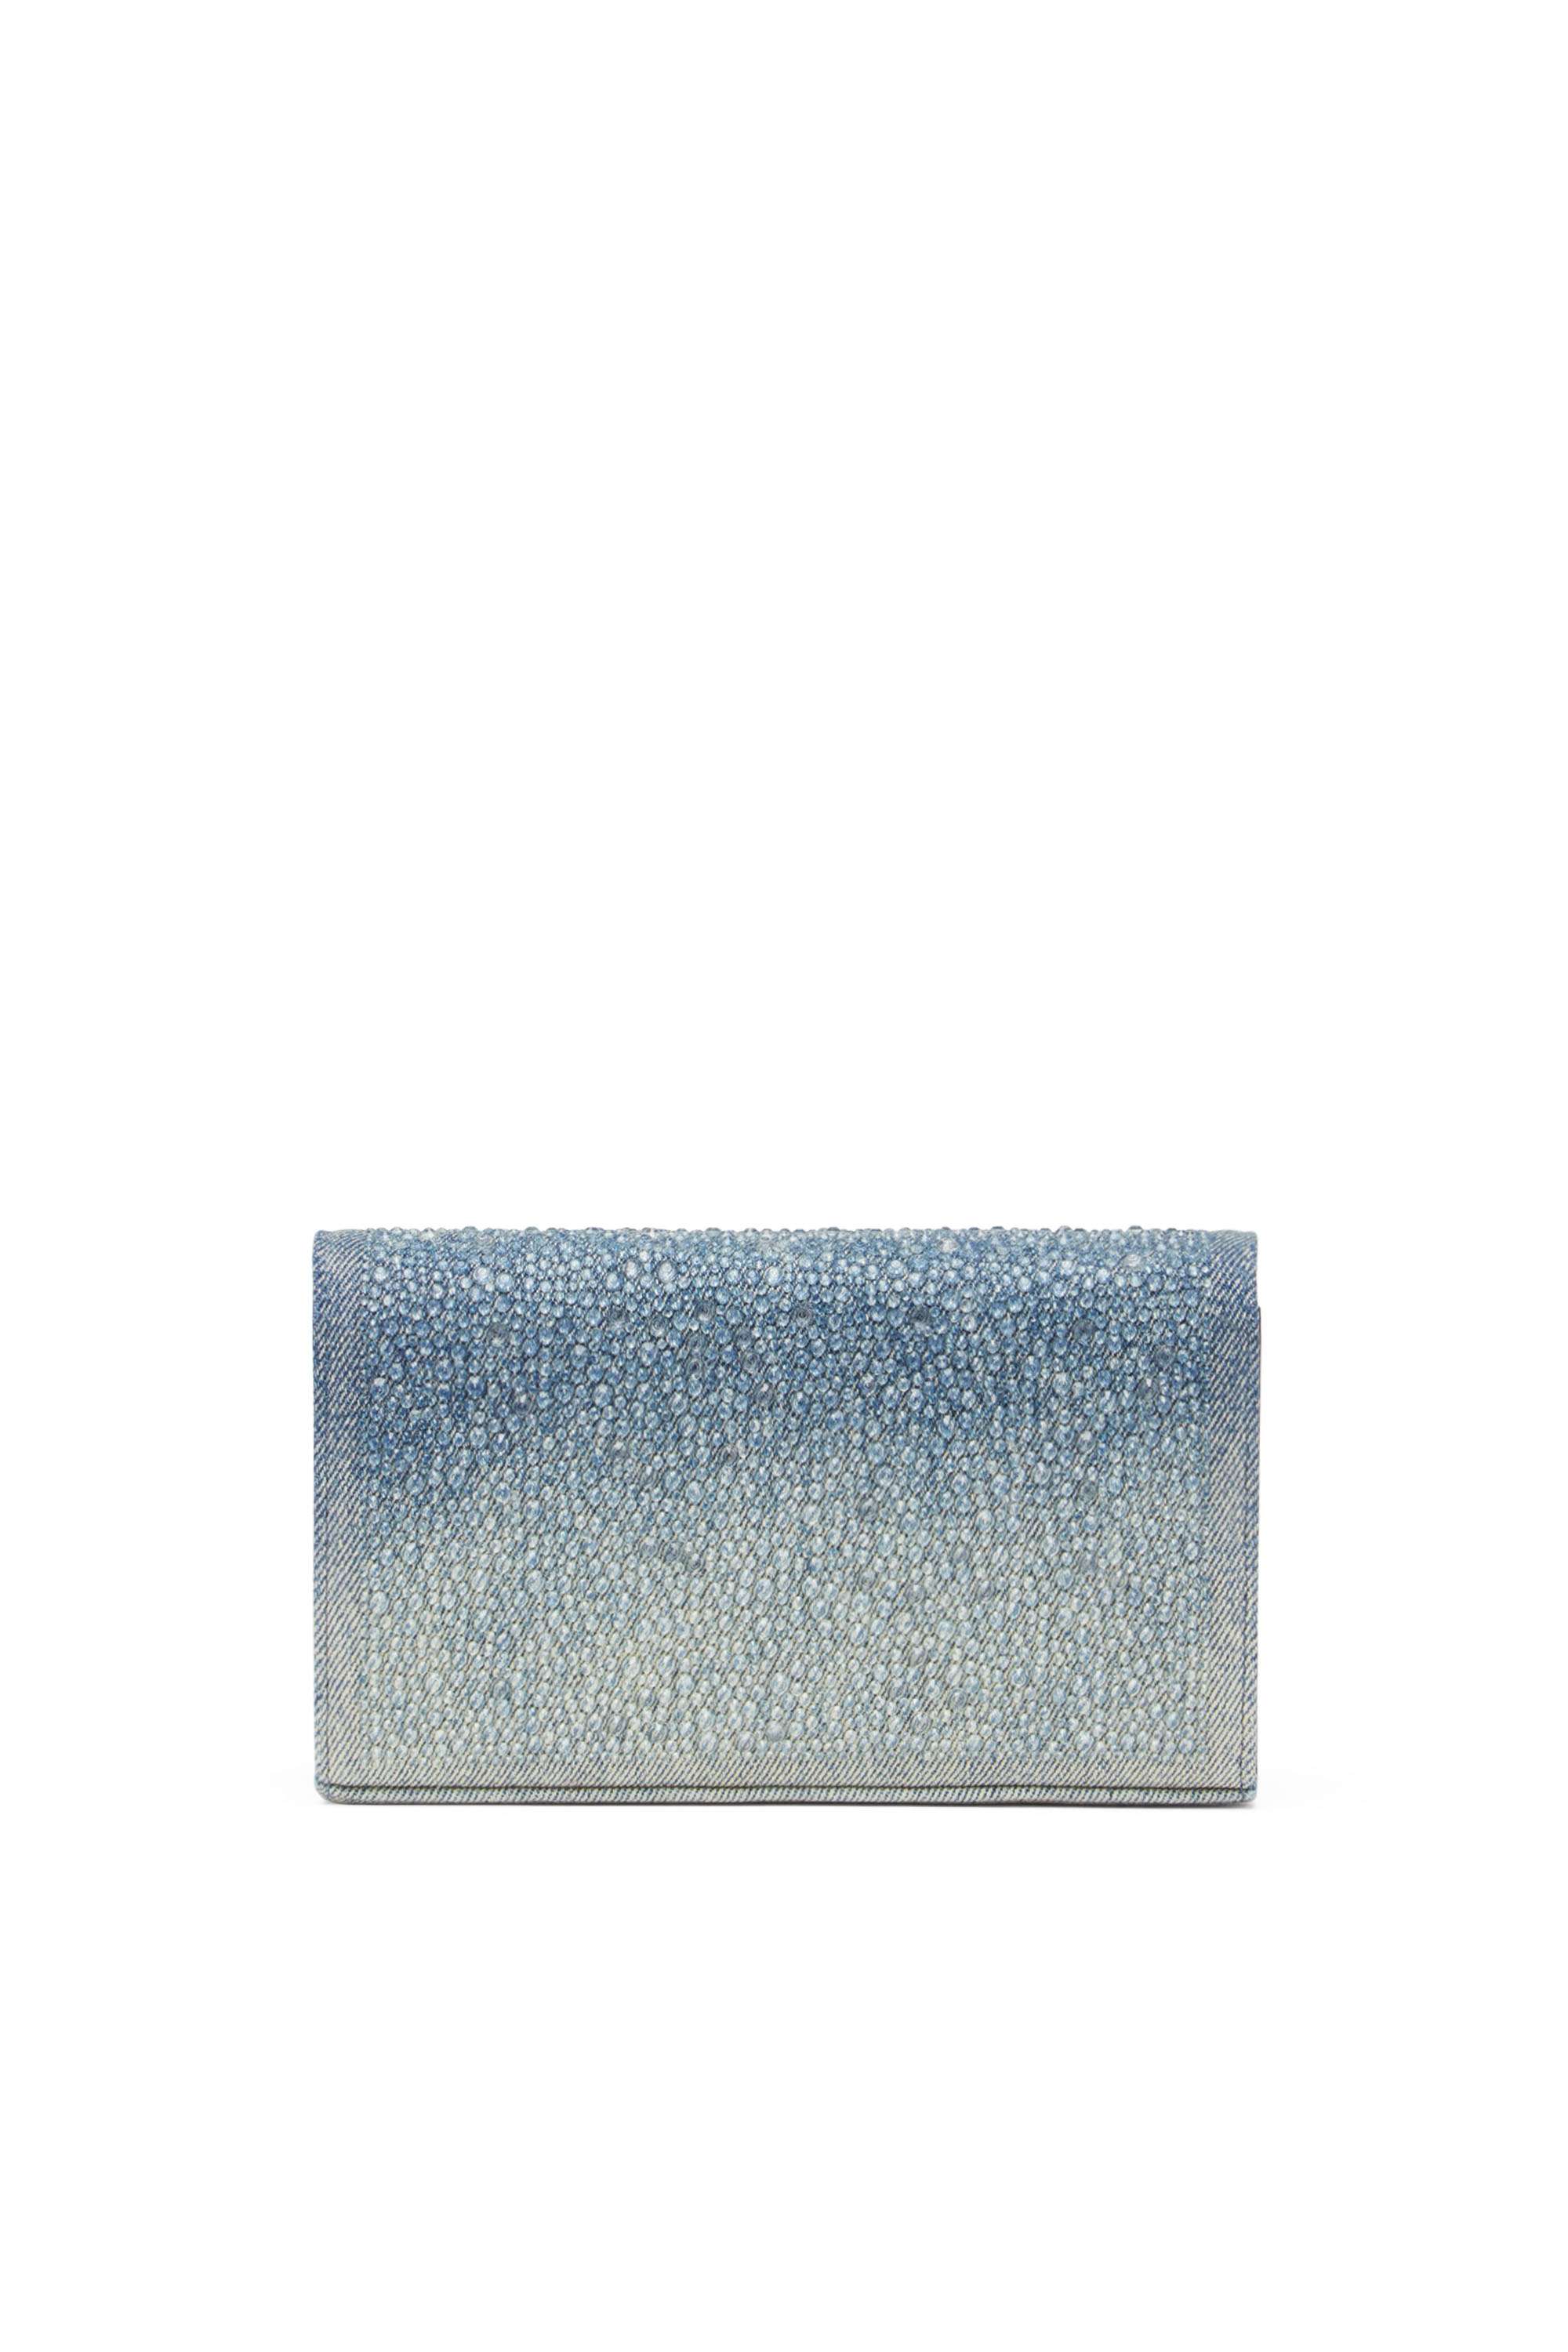 Diesel - 1DR WALLET STRAP, Woman Wallet purse in crystal denim in Blue - Image 2